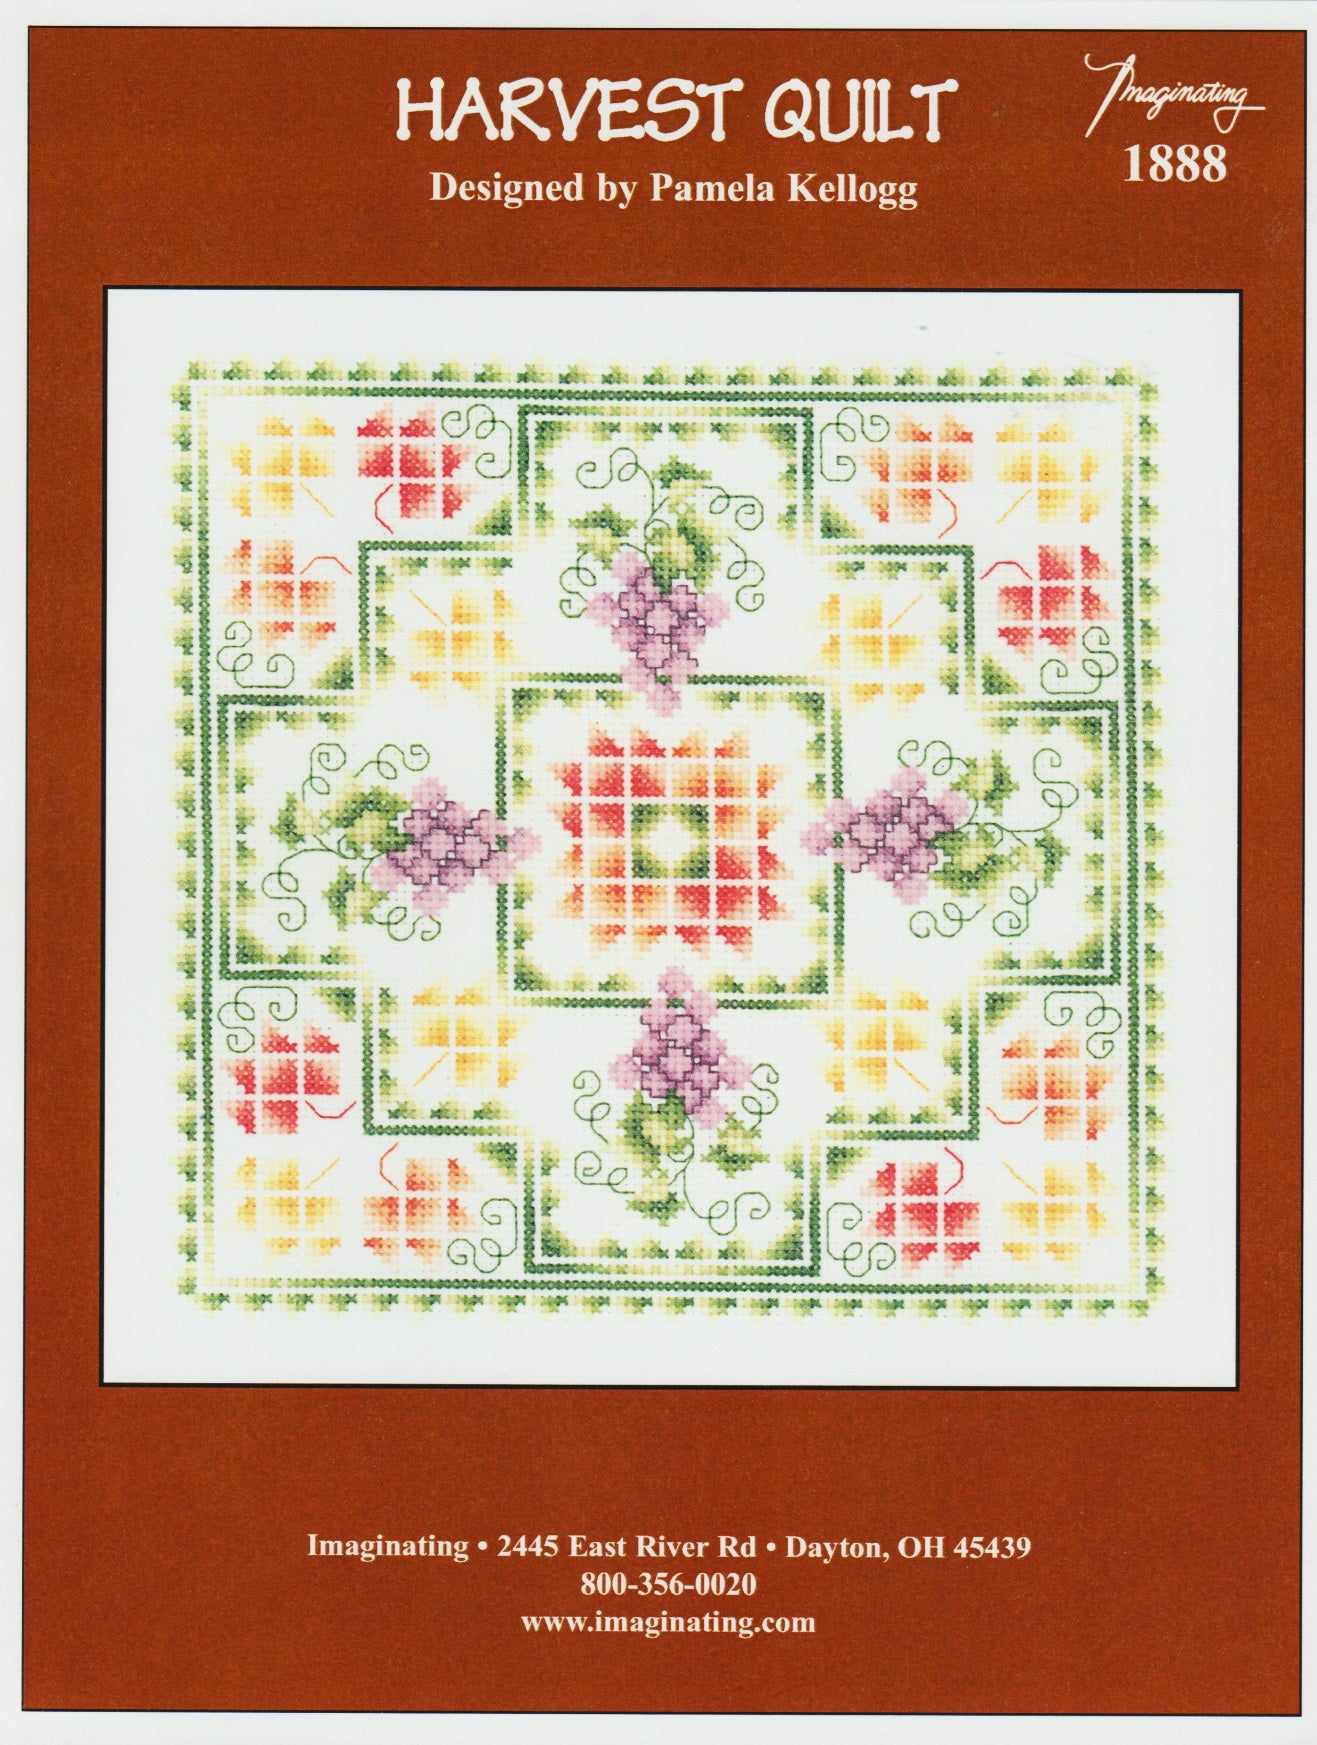 Imaginating Harvest Quilt 1888 cross stitch pattern